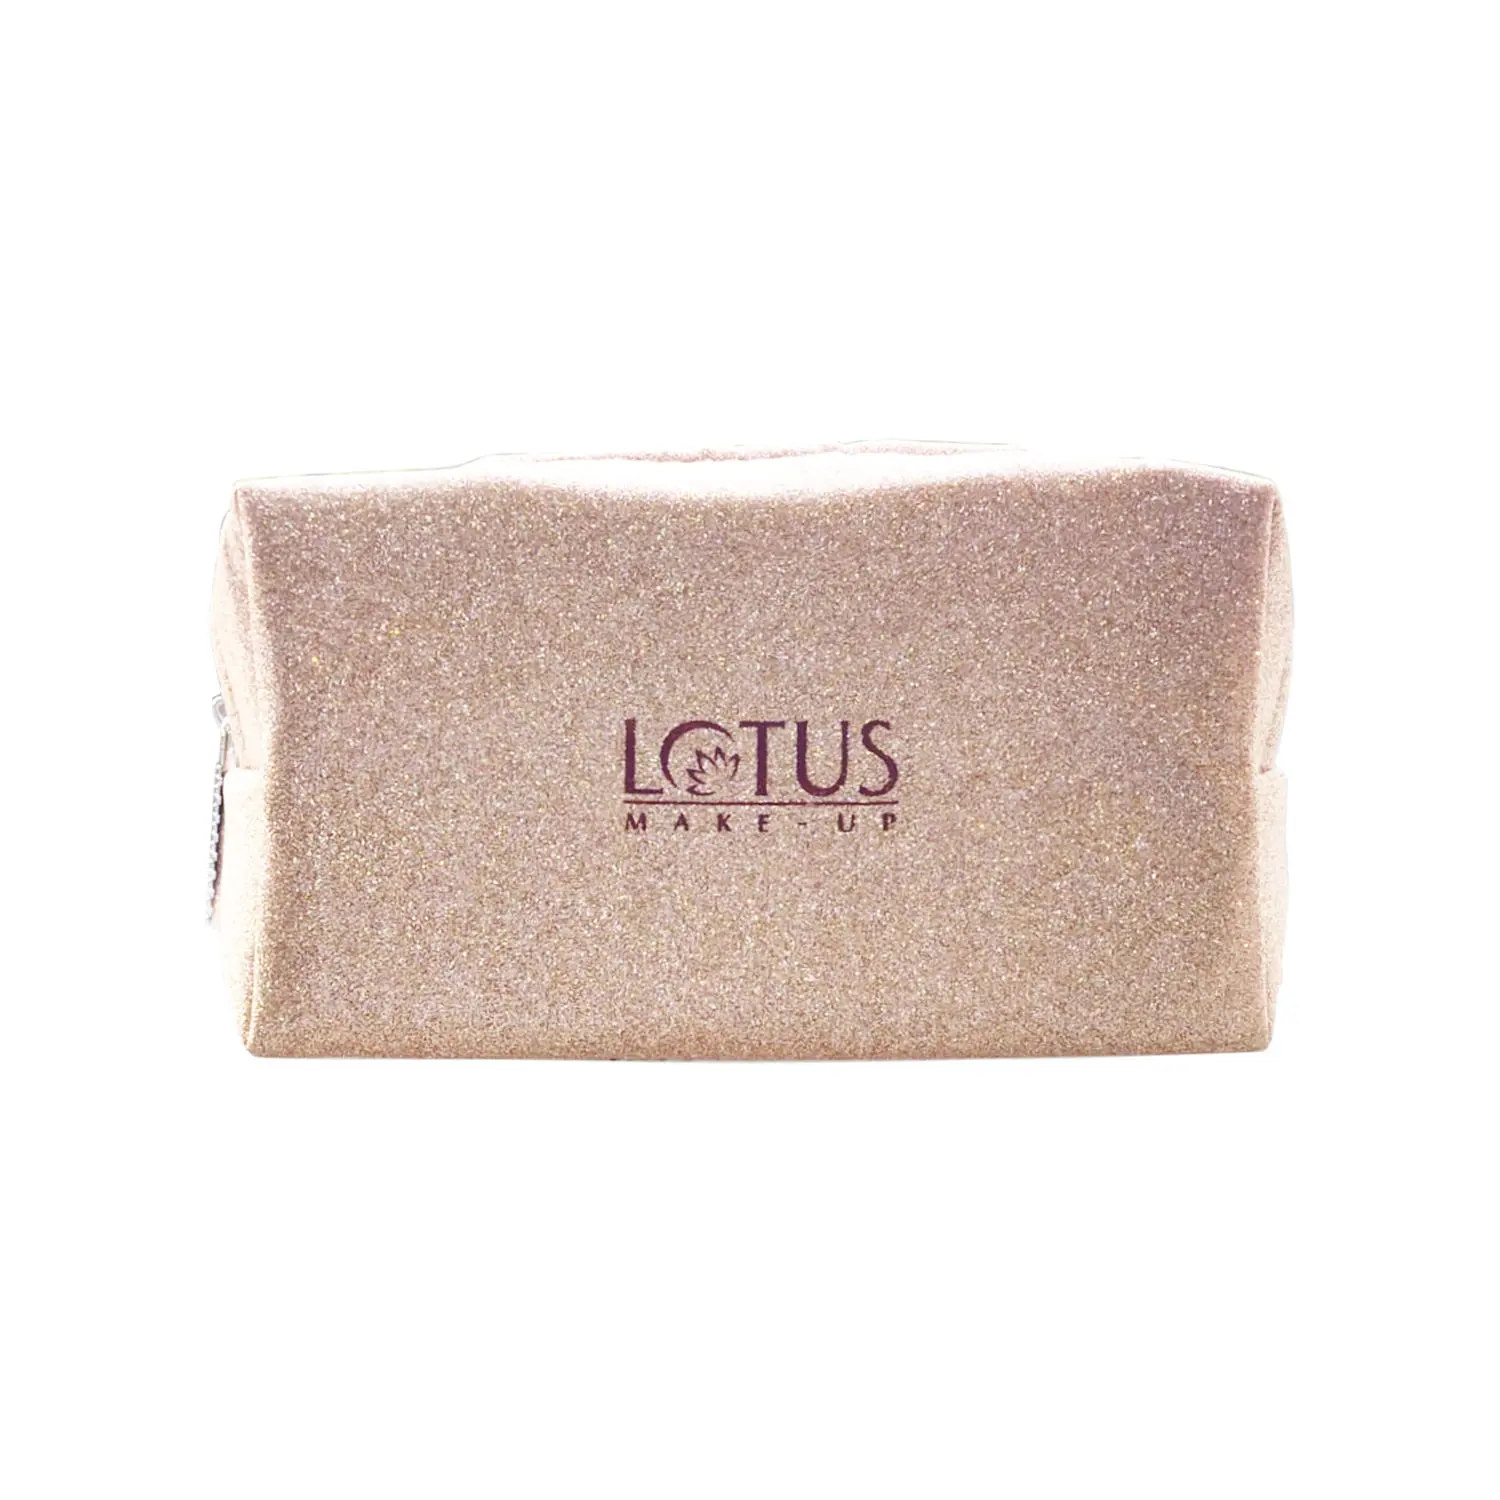 Lotus Makeup Pouch (Free)